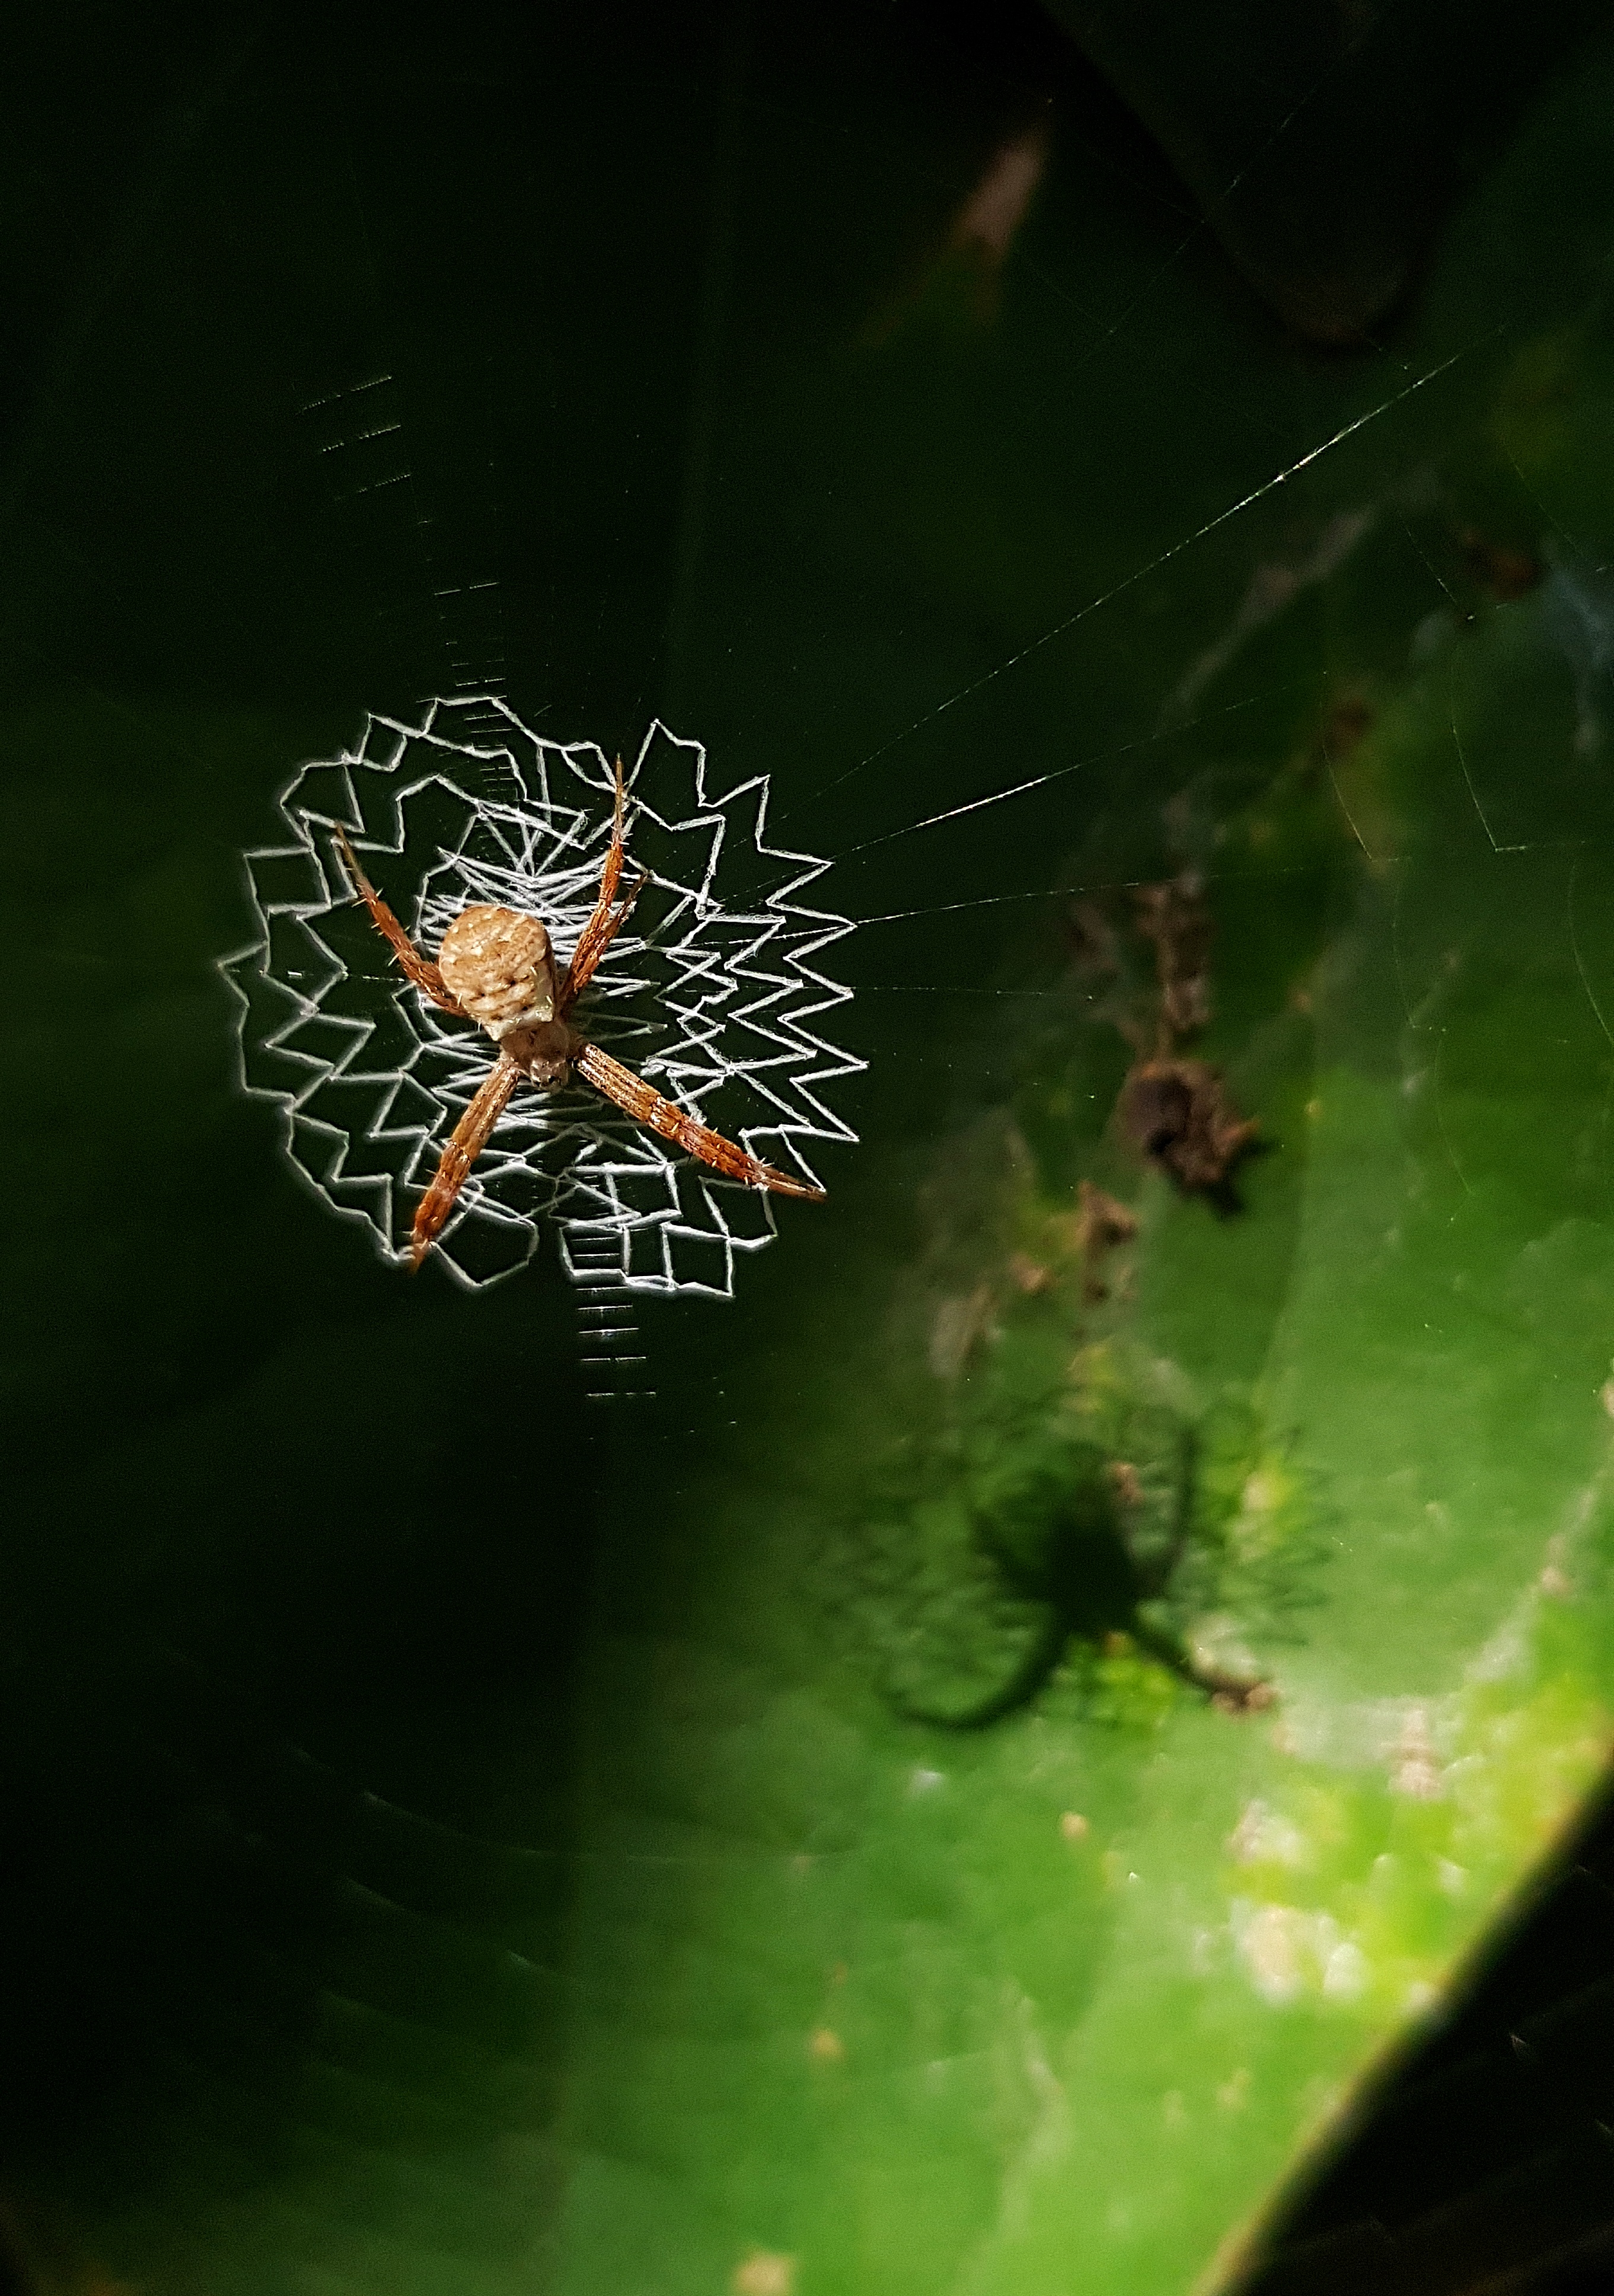 Spider with a unique web